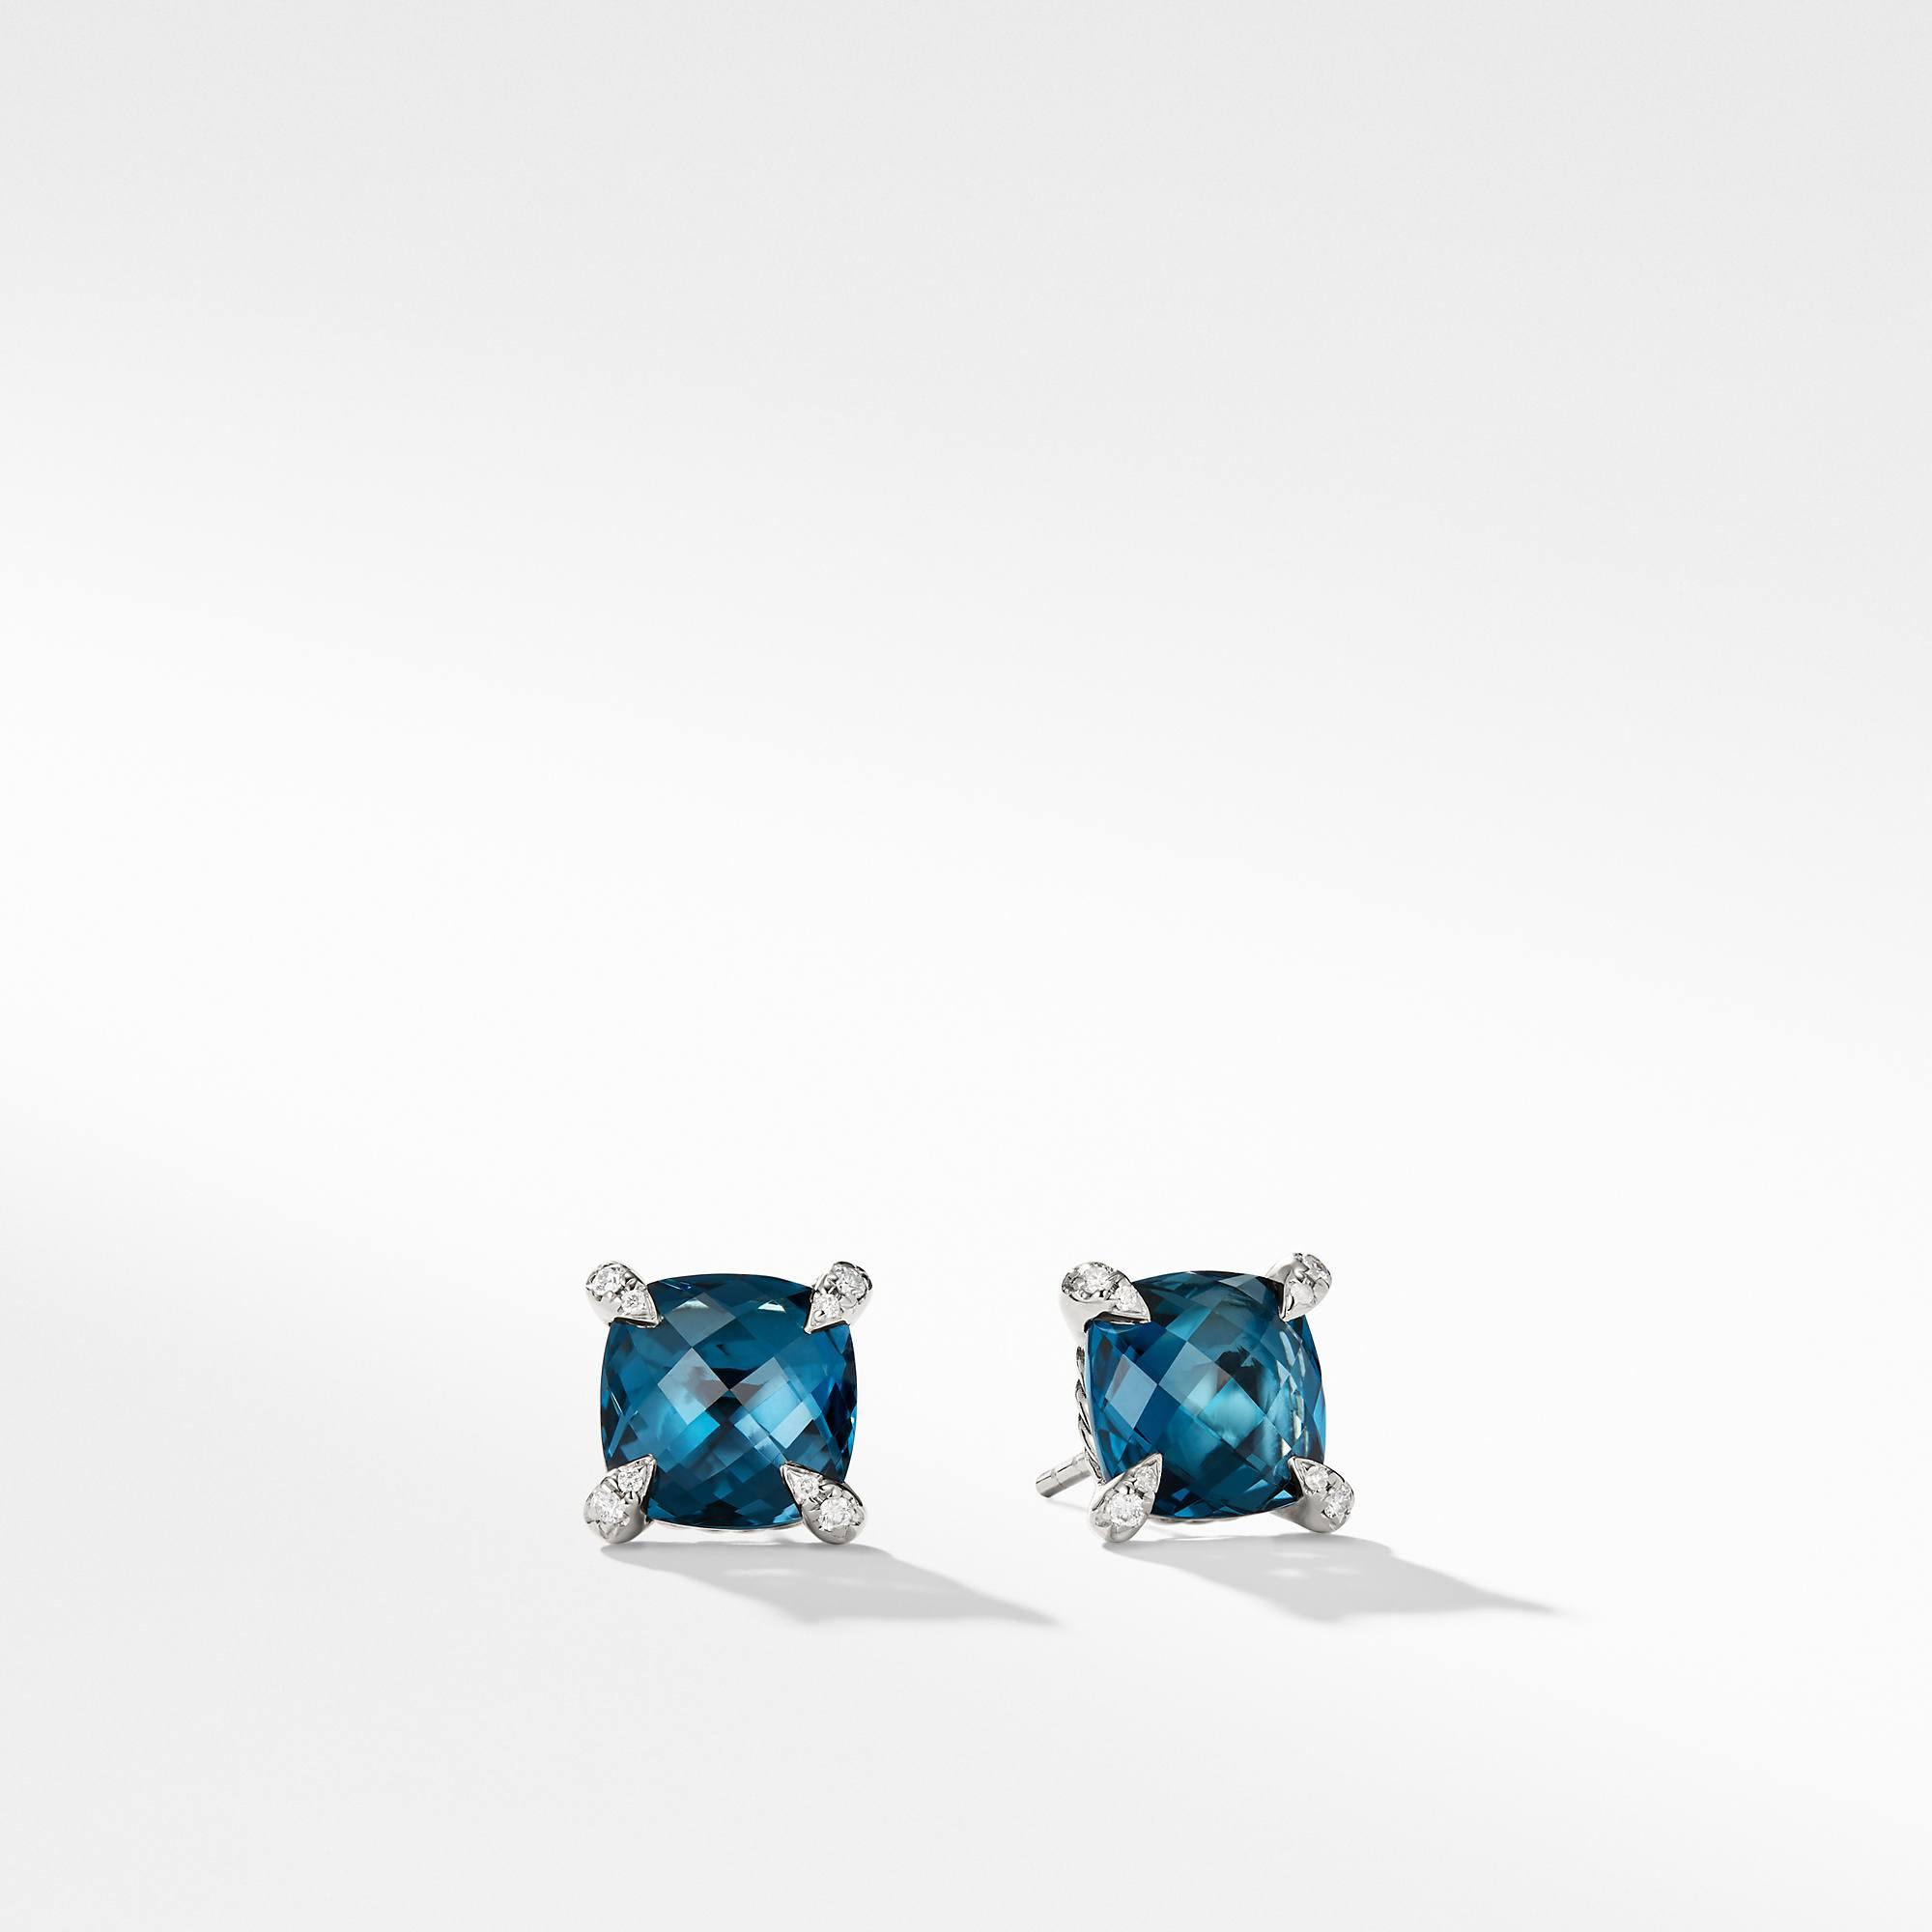 David Yurman Earrings with Hampton Blue Topaz and Diamonds 0